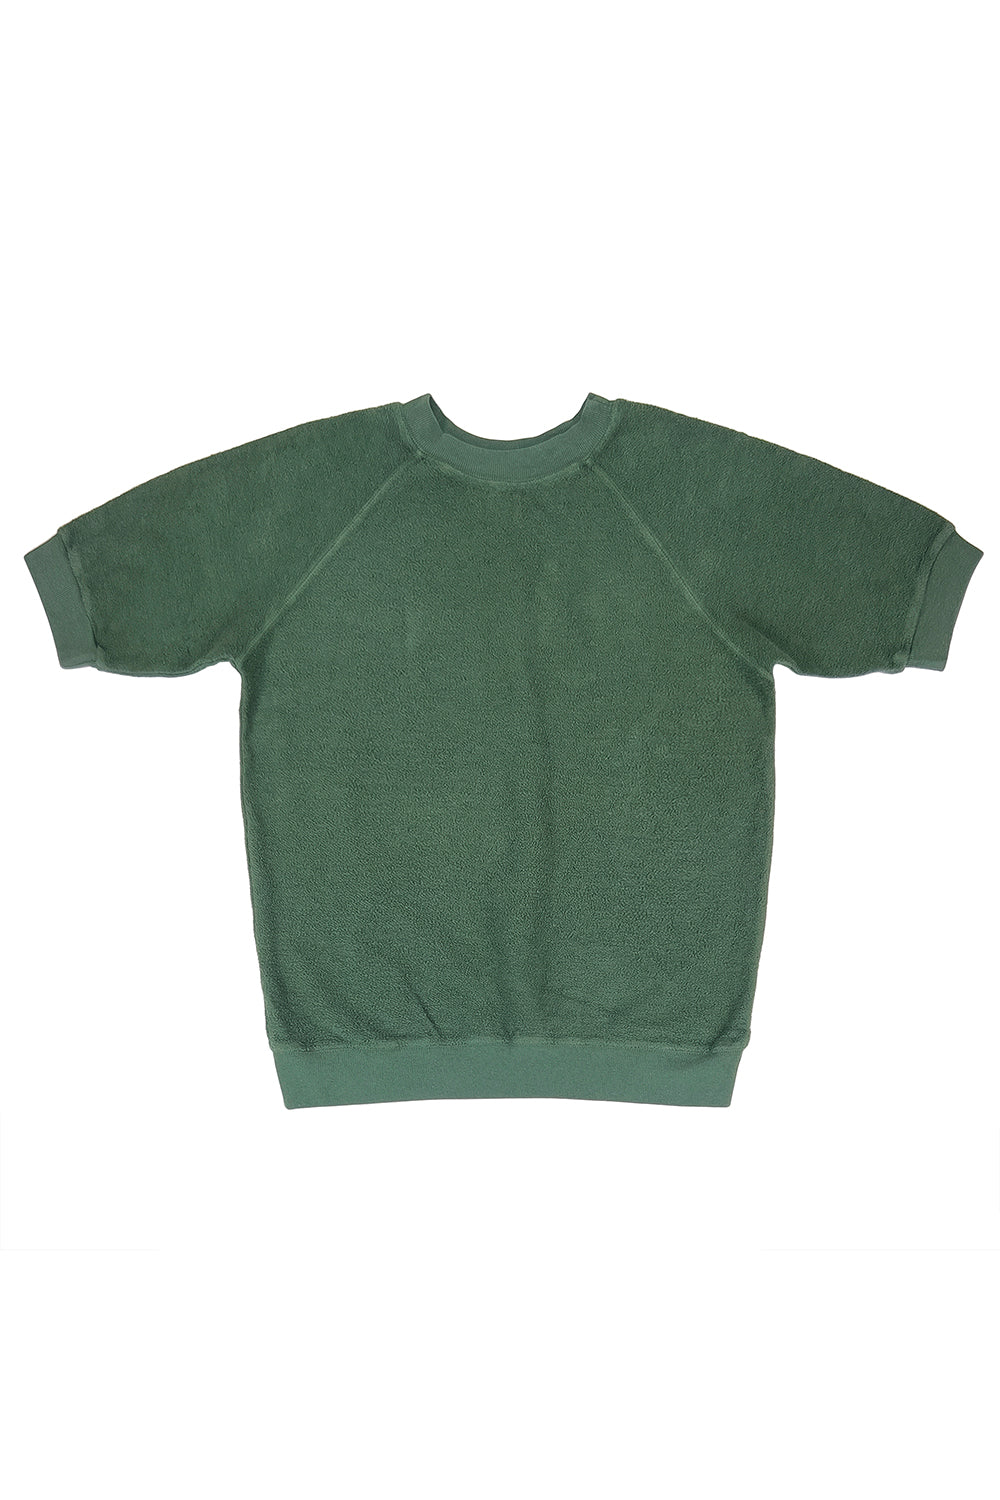 Short Sleeve Raglan Sherpa Sweatshirt | Jungmaven Hemp Clothing & Accessories / Color: Hunter Green